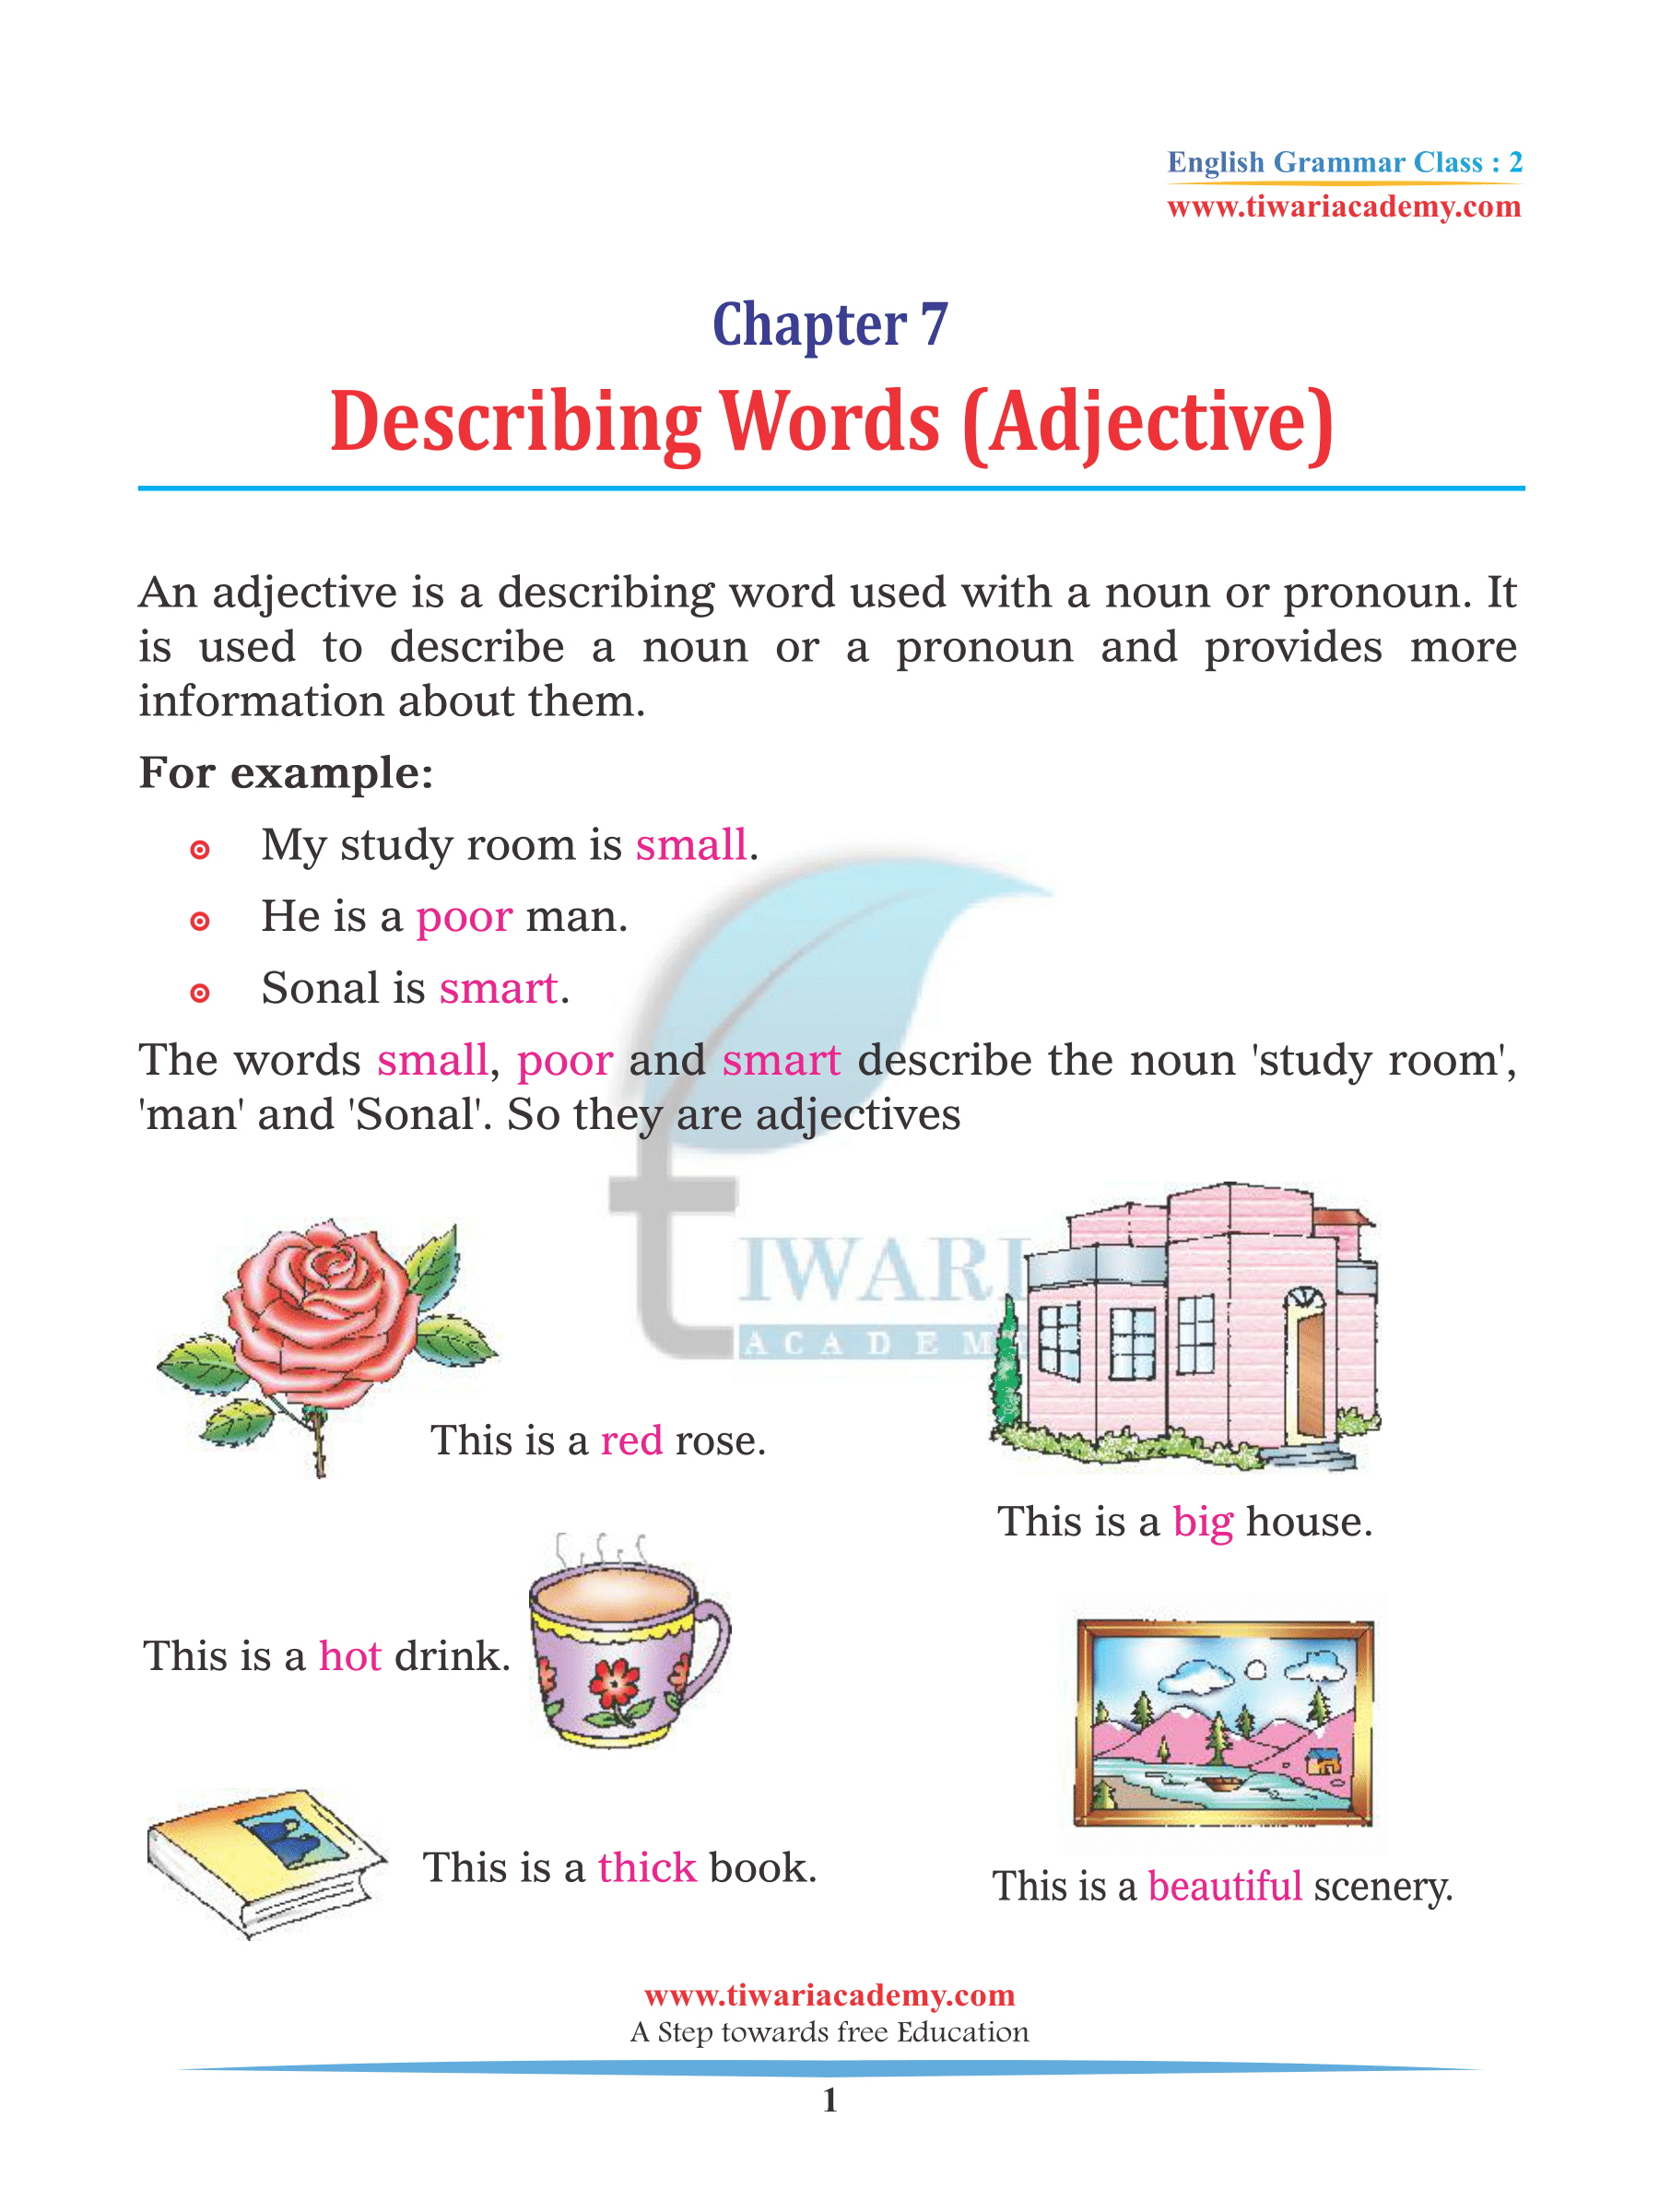 Class 2 English Grammar Chapter 7 Adjectives assignments